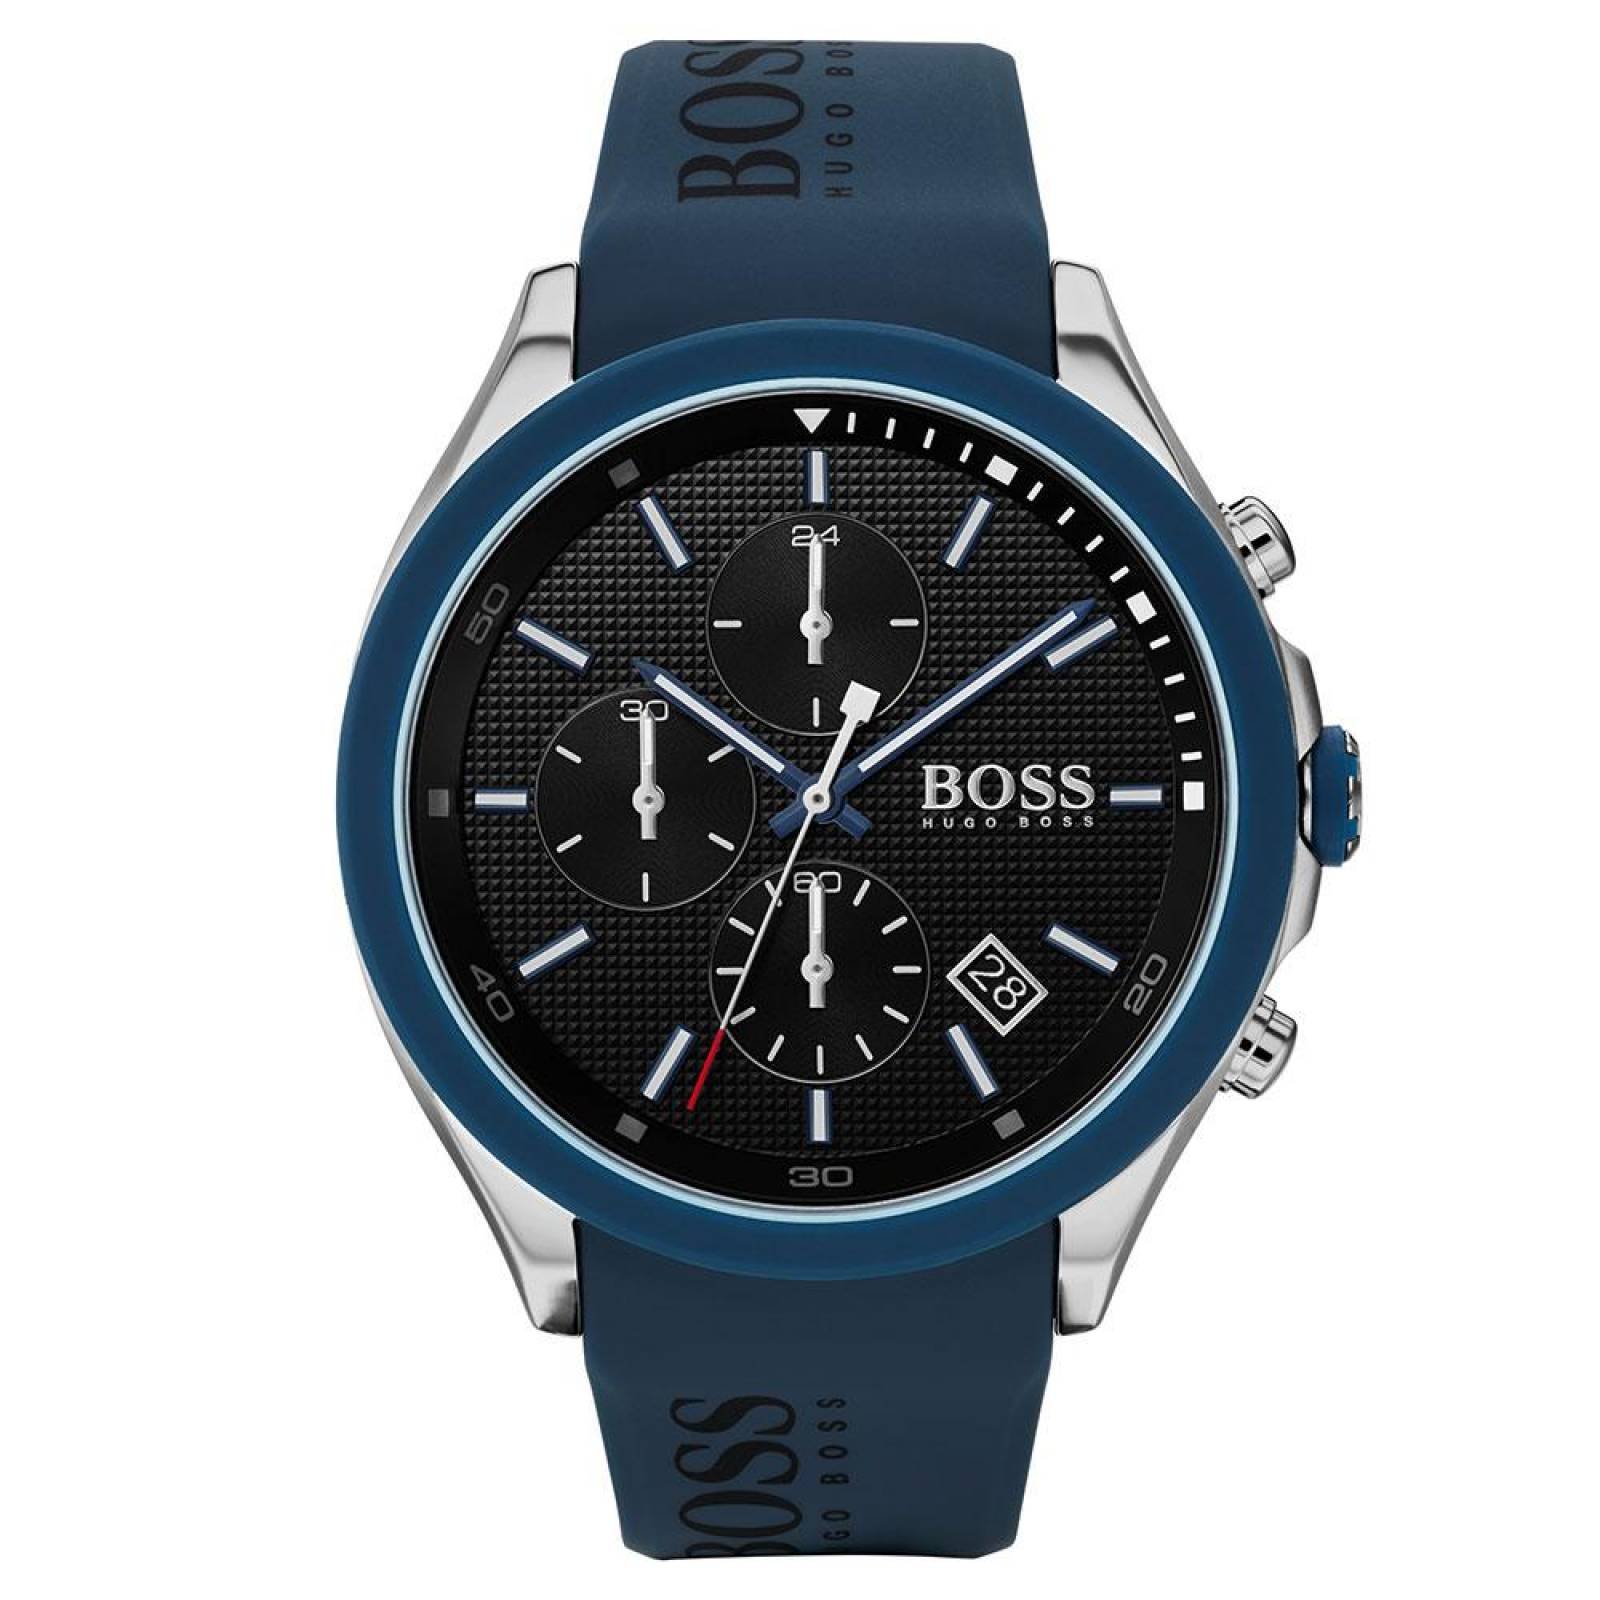 Часы хуго босс. Часы Hugo Boss Velocity. Часы Хуго босс мужские. Часы Хьюго босс мужские. Хуго босс мужские часы синий.